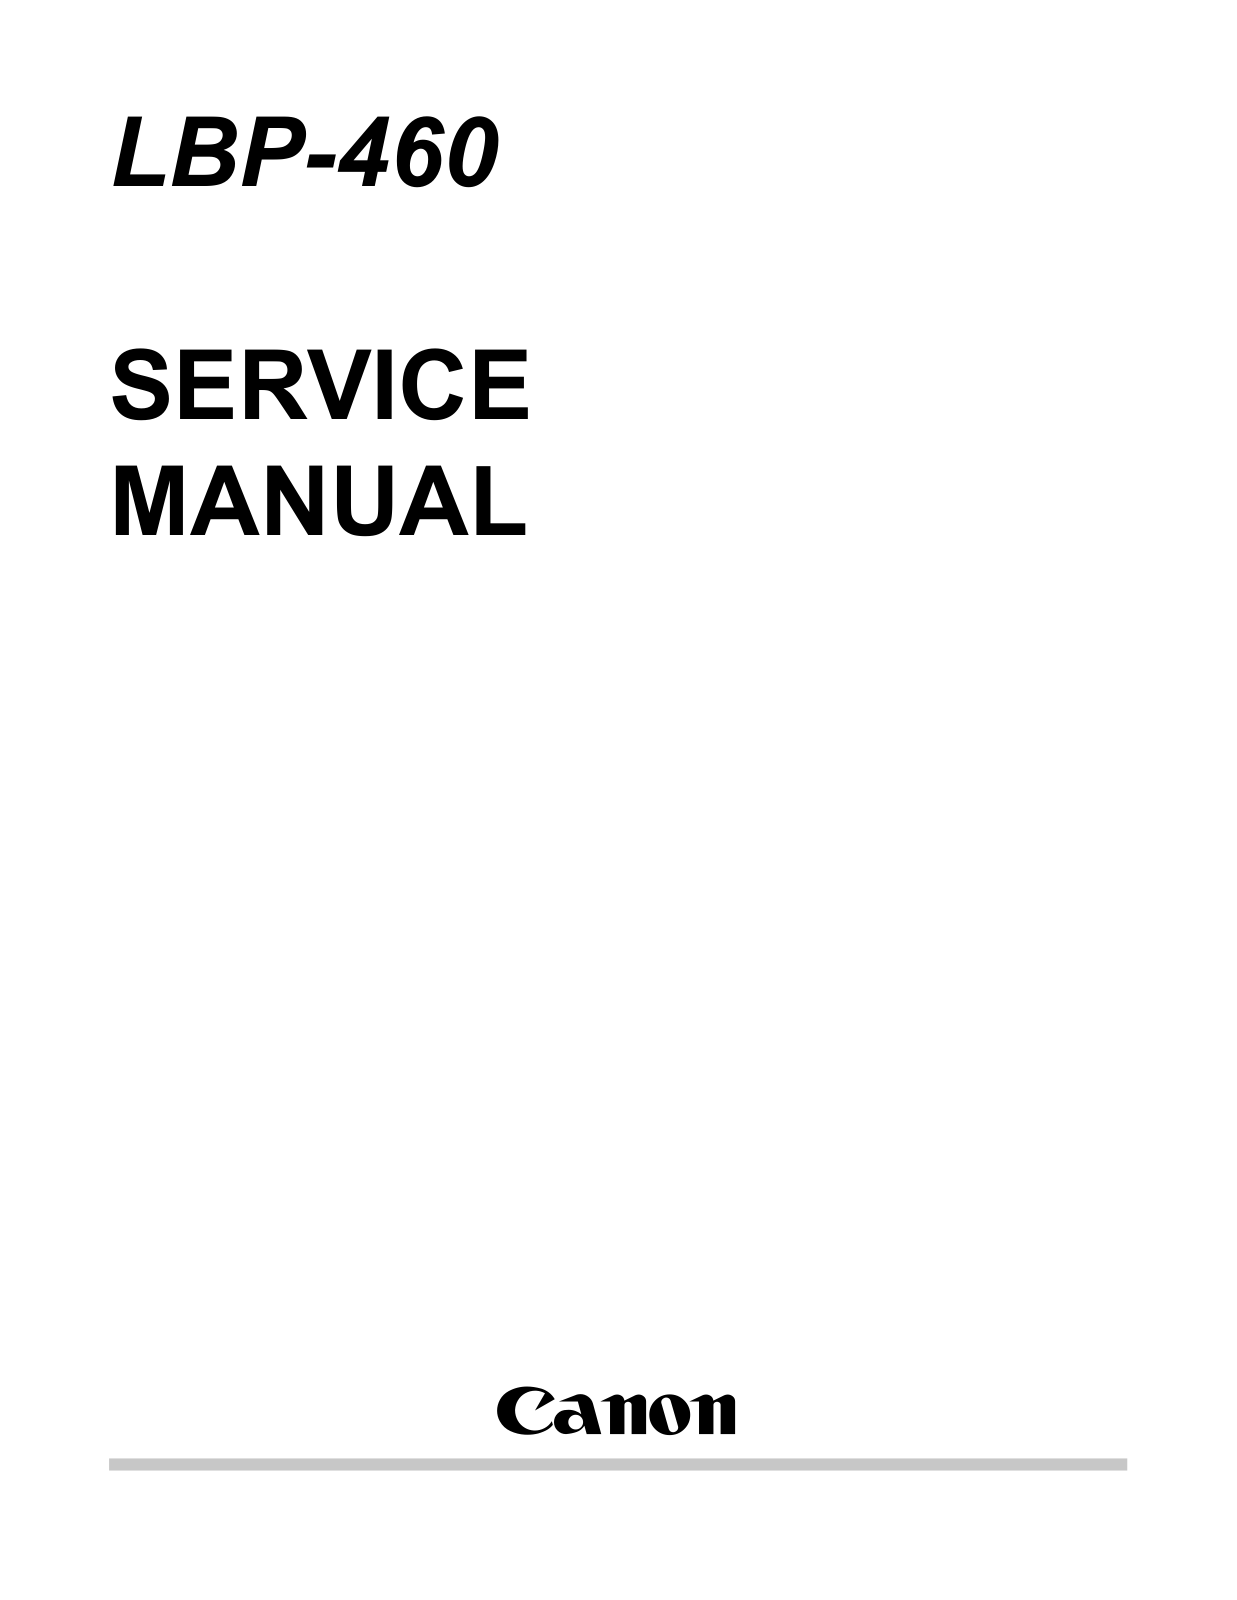 Canon LBP-460 Service Manual